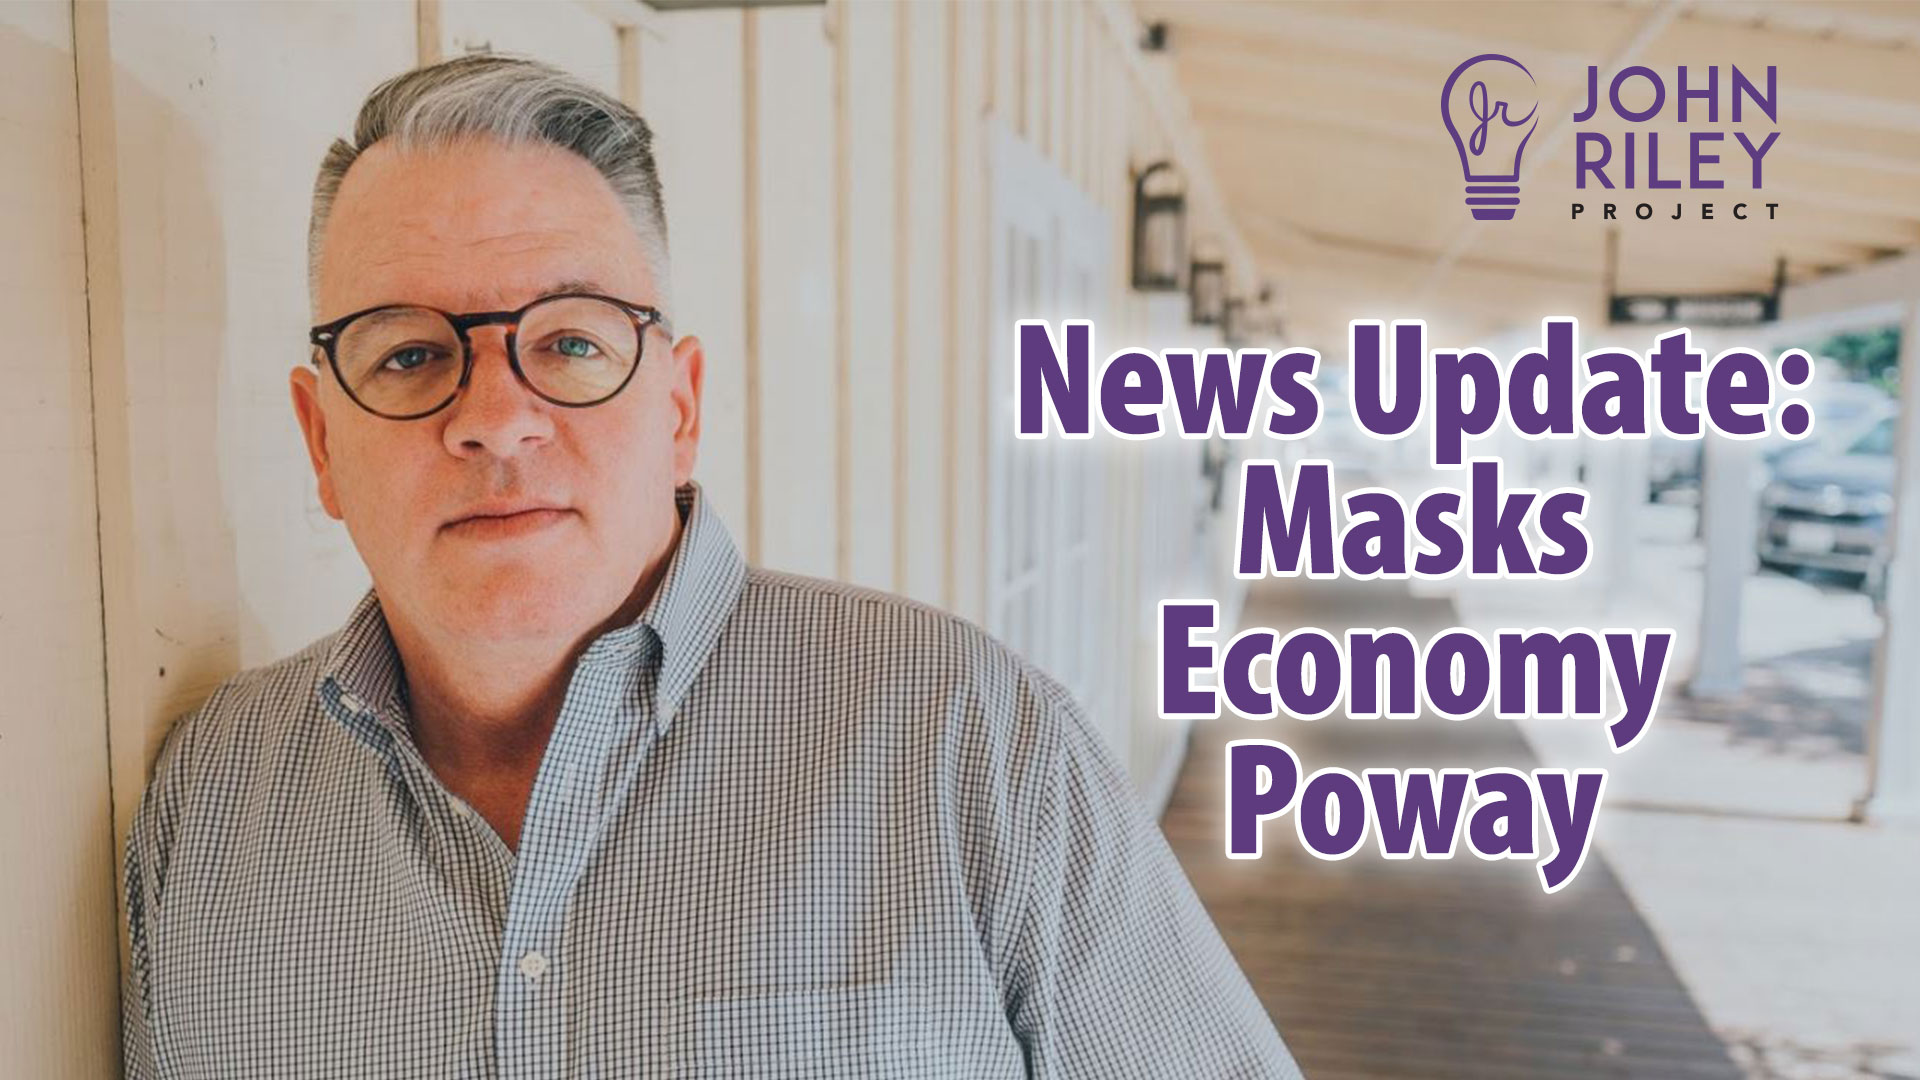 News update, Poway, Masks, Economy, John Riley Project, JRP0146